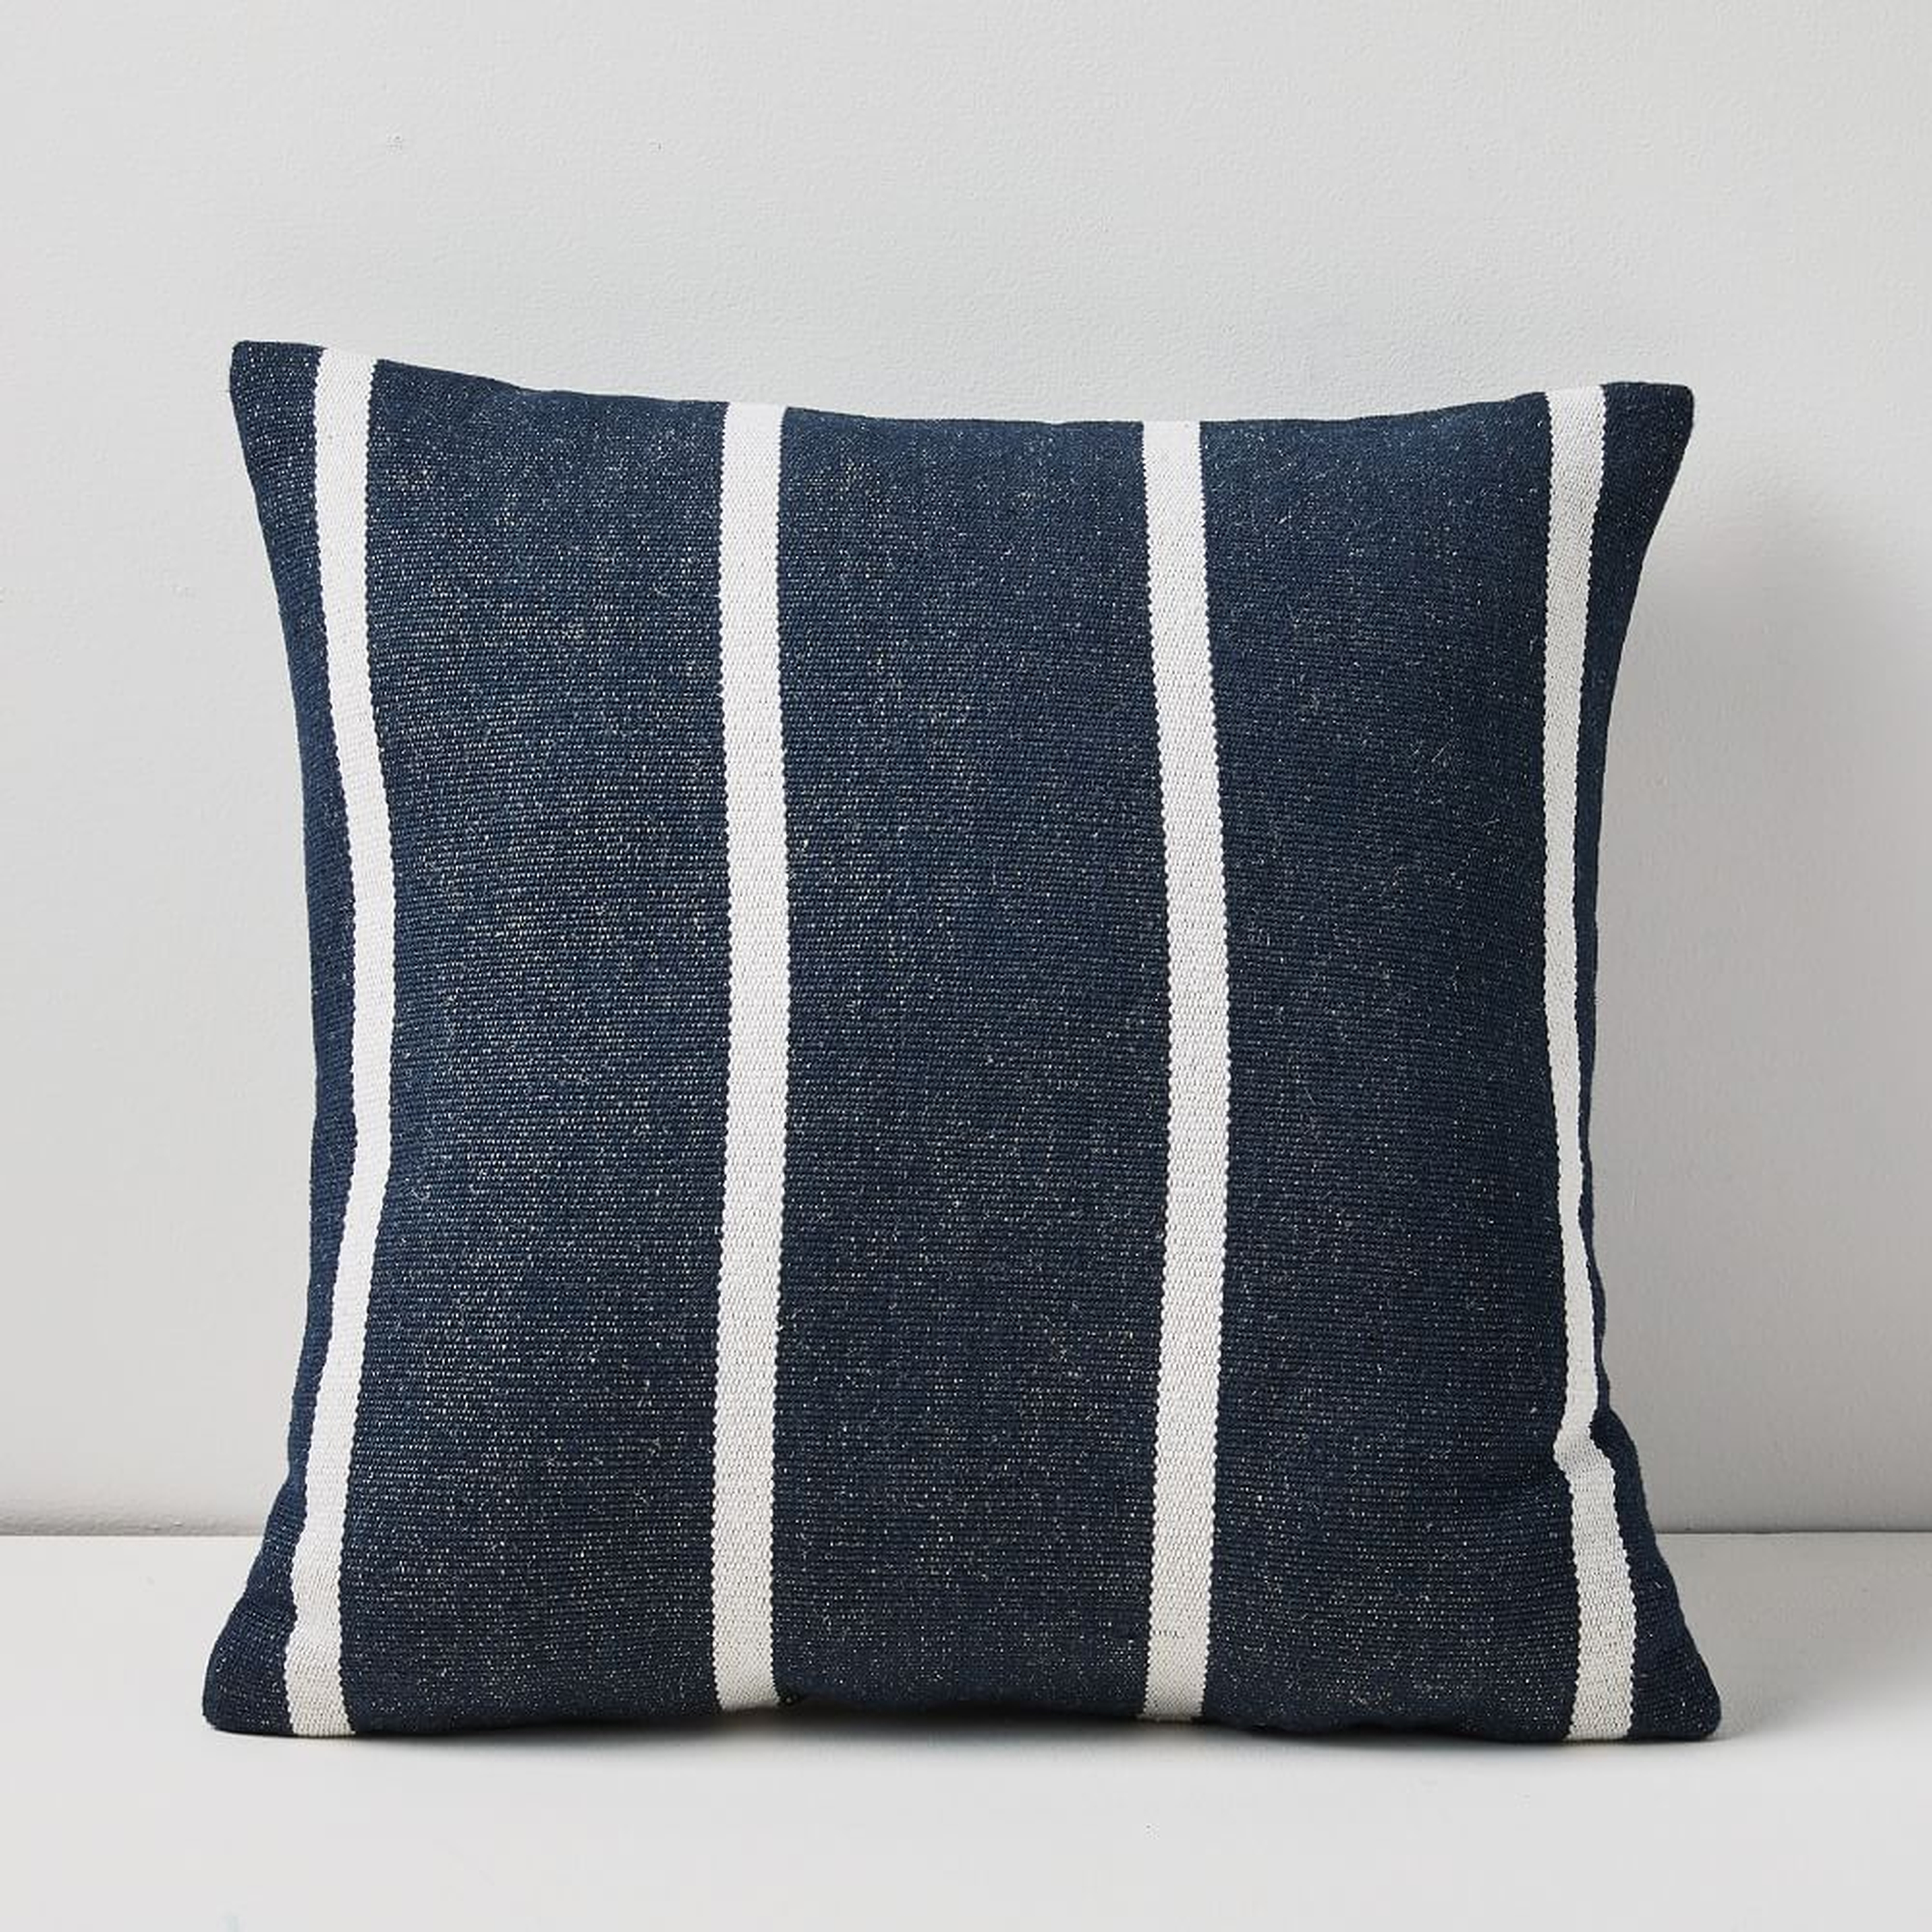 Outdoor Simple Stripe Pillow, 20"x20", Midnight, Set of 2 - West Elm